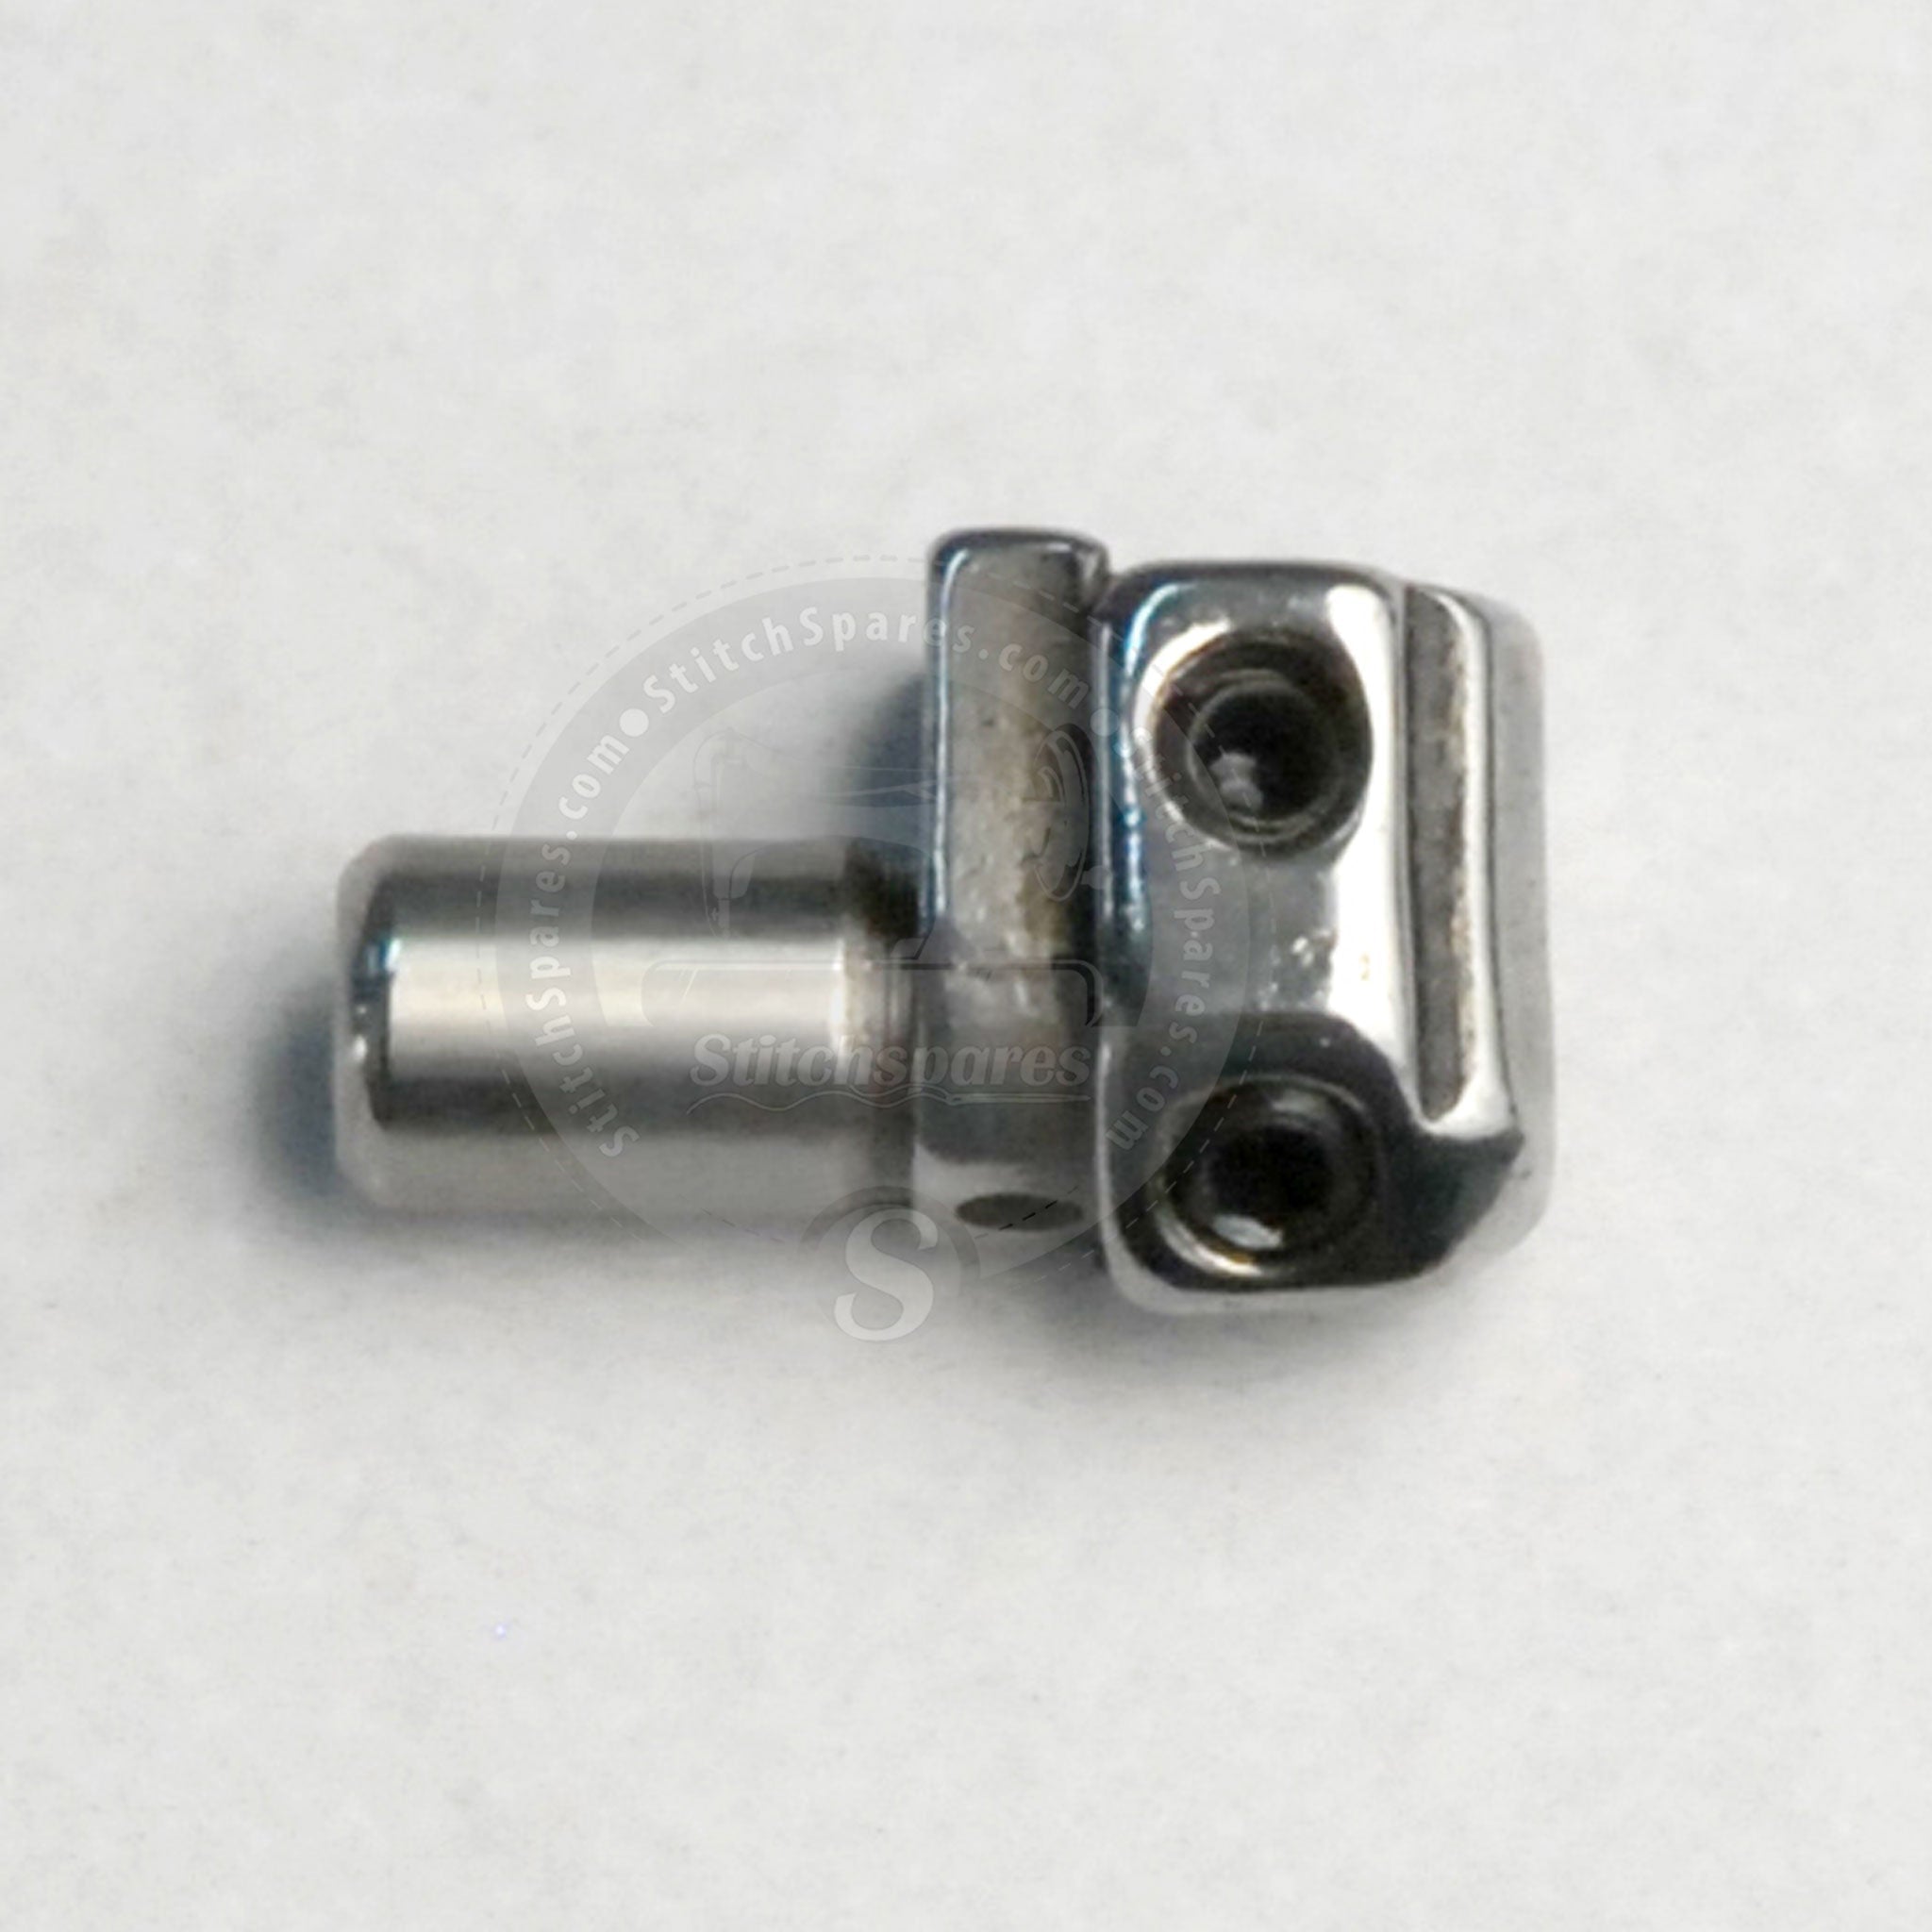 JACK 804 Abrazadera de aguja JK-804D-M2-24 Repuestos para máquina de coser Overlock de 4 hilos